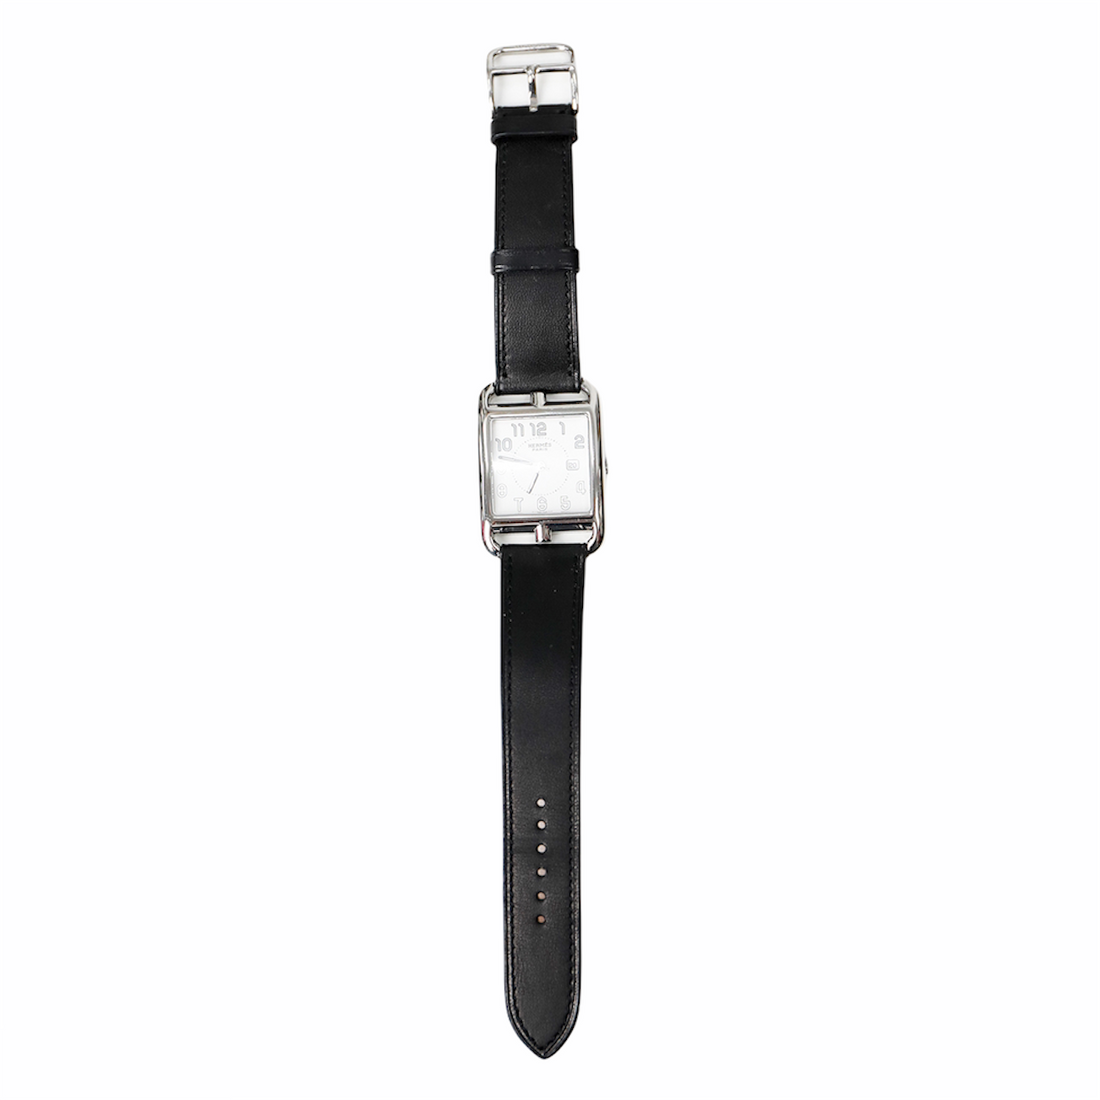 Hermès 29 x 29 Cape Cod women&#39;s watch with black leather strap